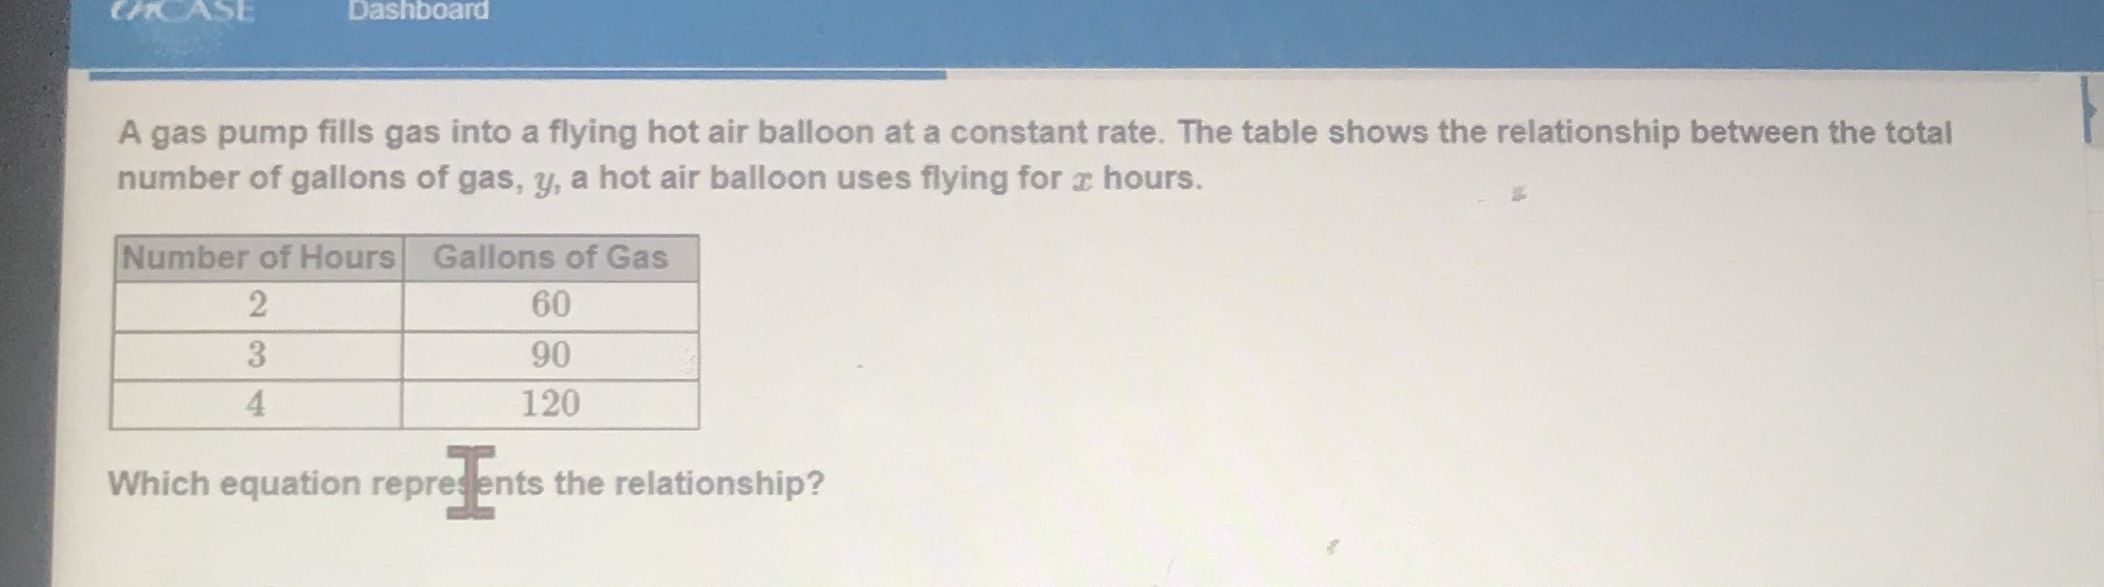 A gas pump fills gas into a flying hot air balloon...